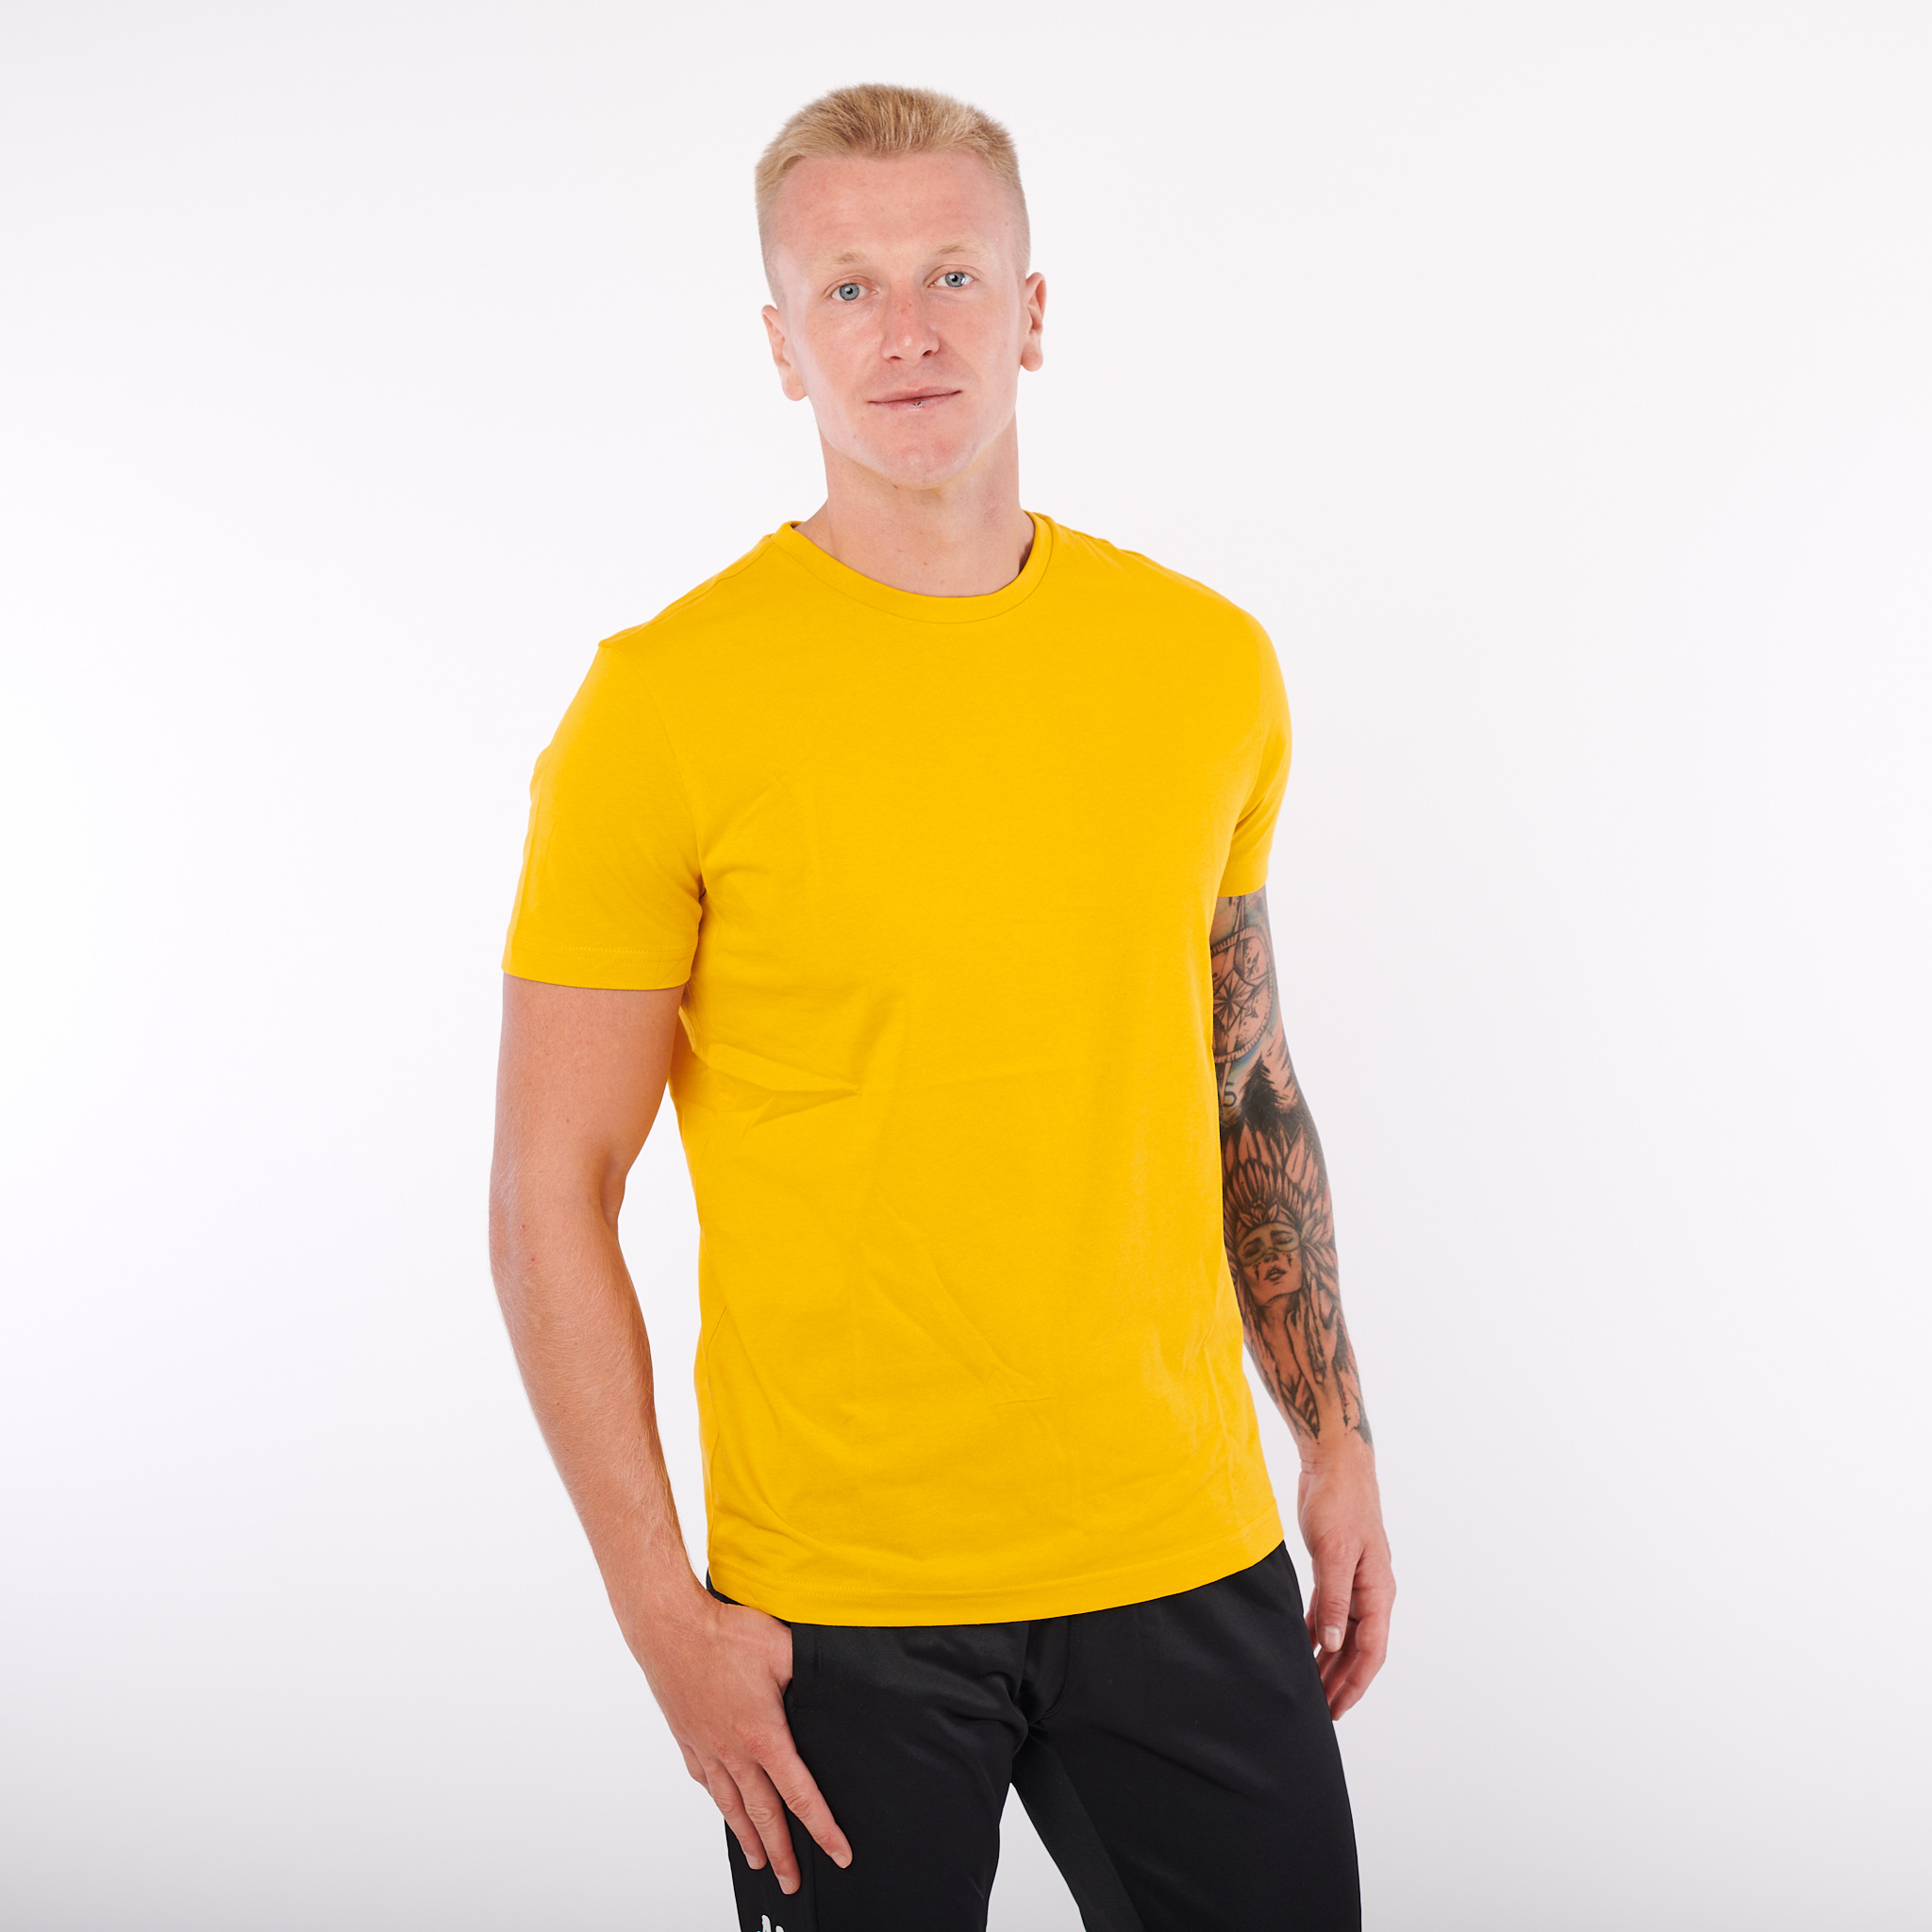 LOGO KAFERSCK tričko žlutá